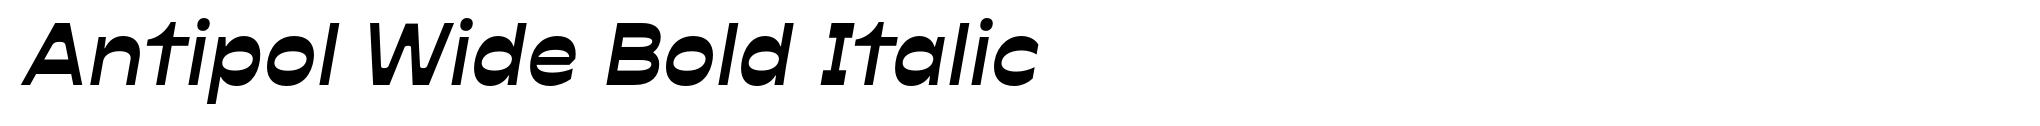 Antipol Wide Bold Italic image